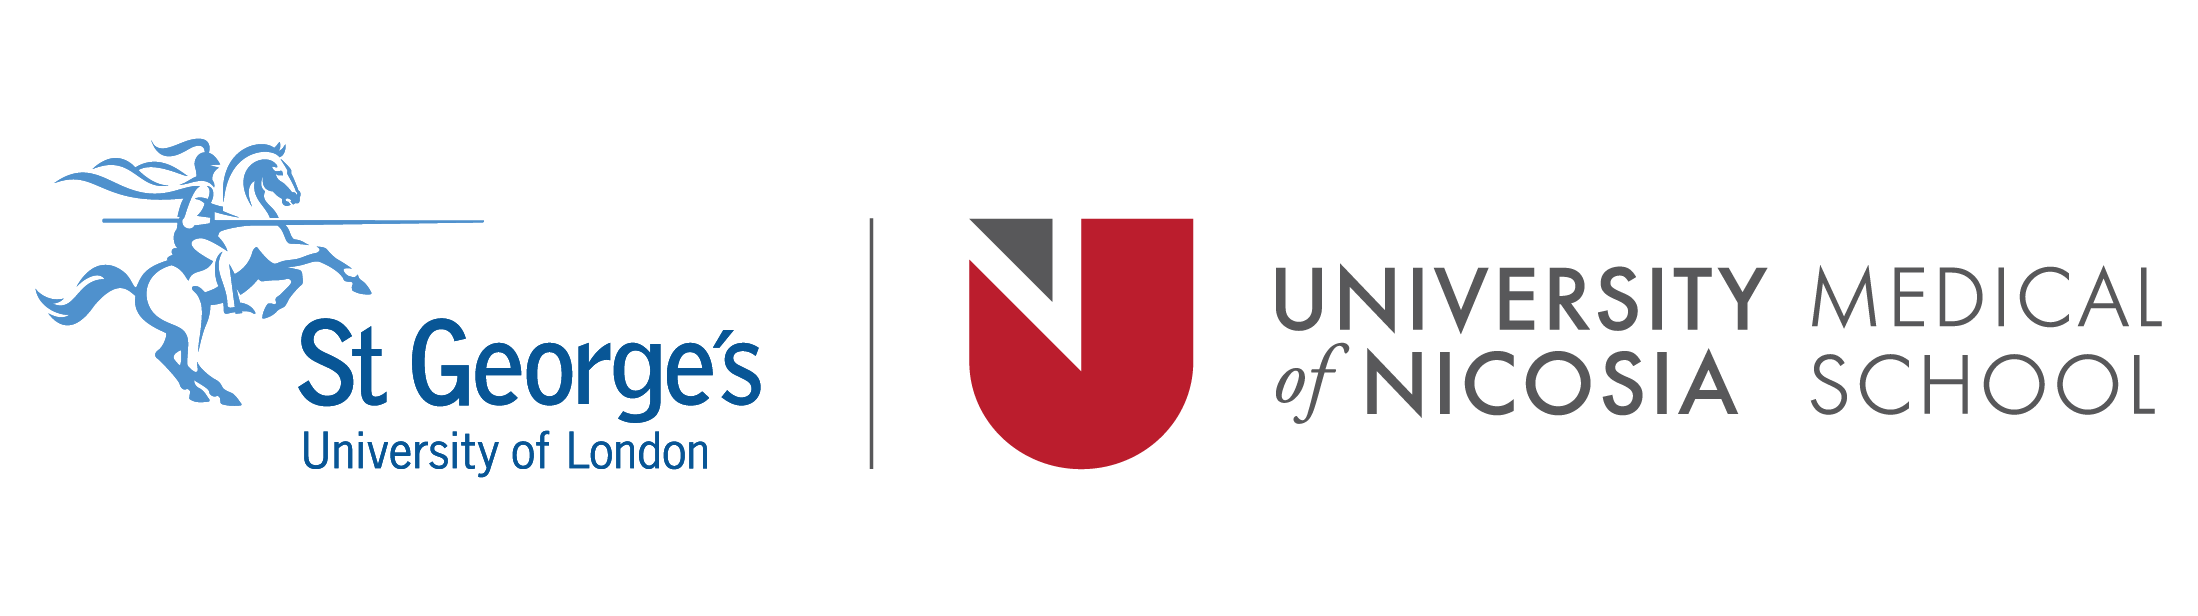 St. George's University of London | University of Nicosia Medical School Logo